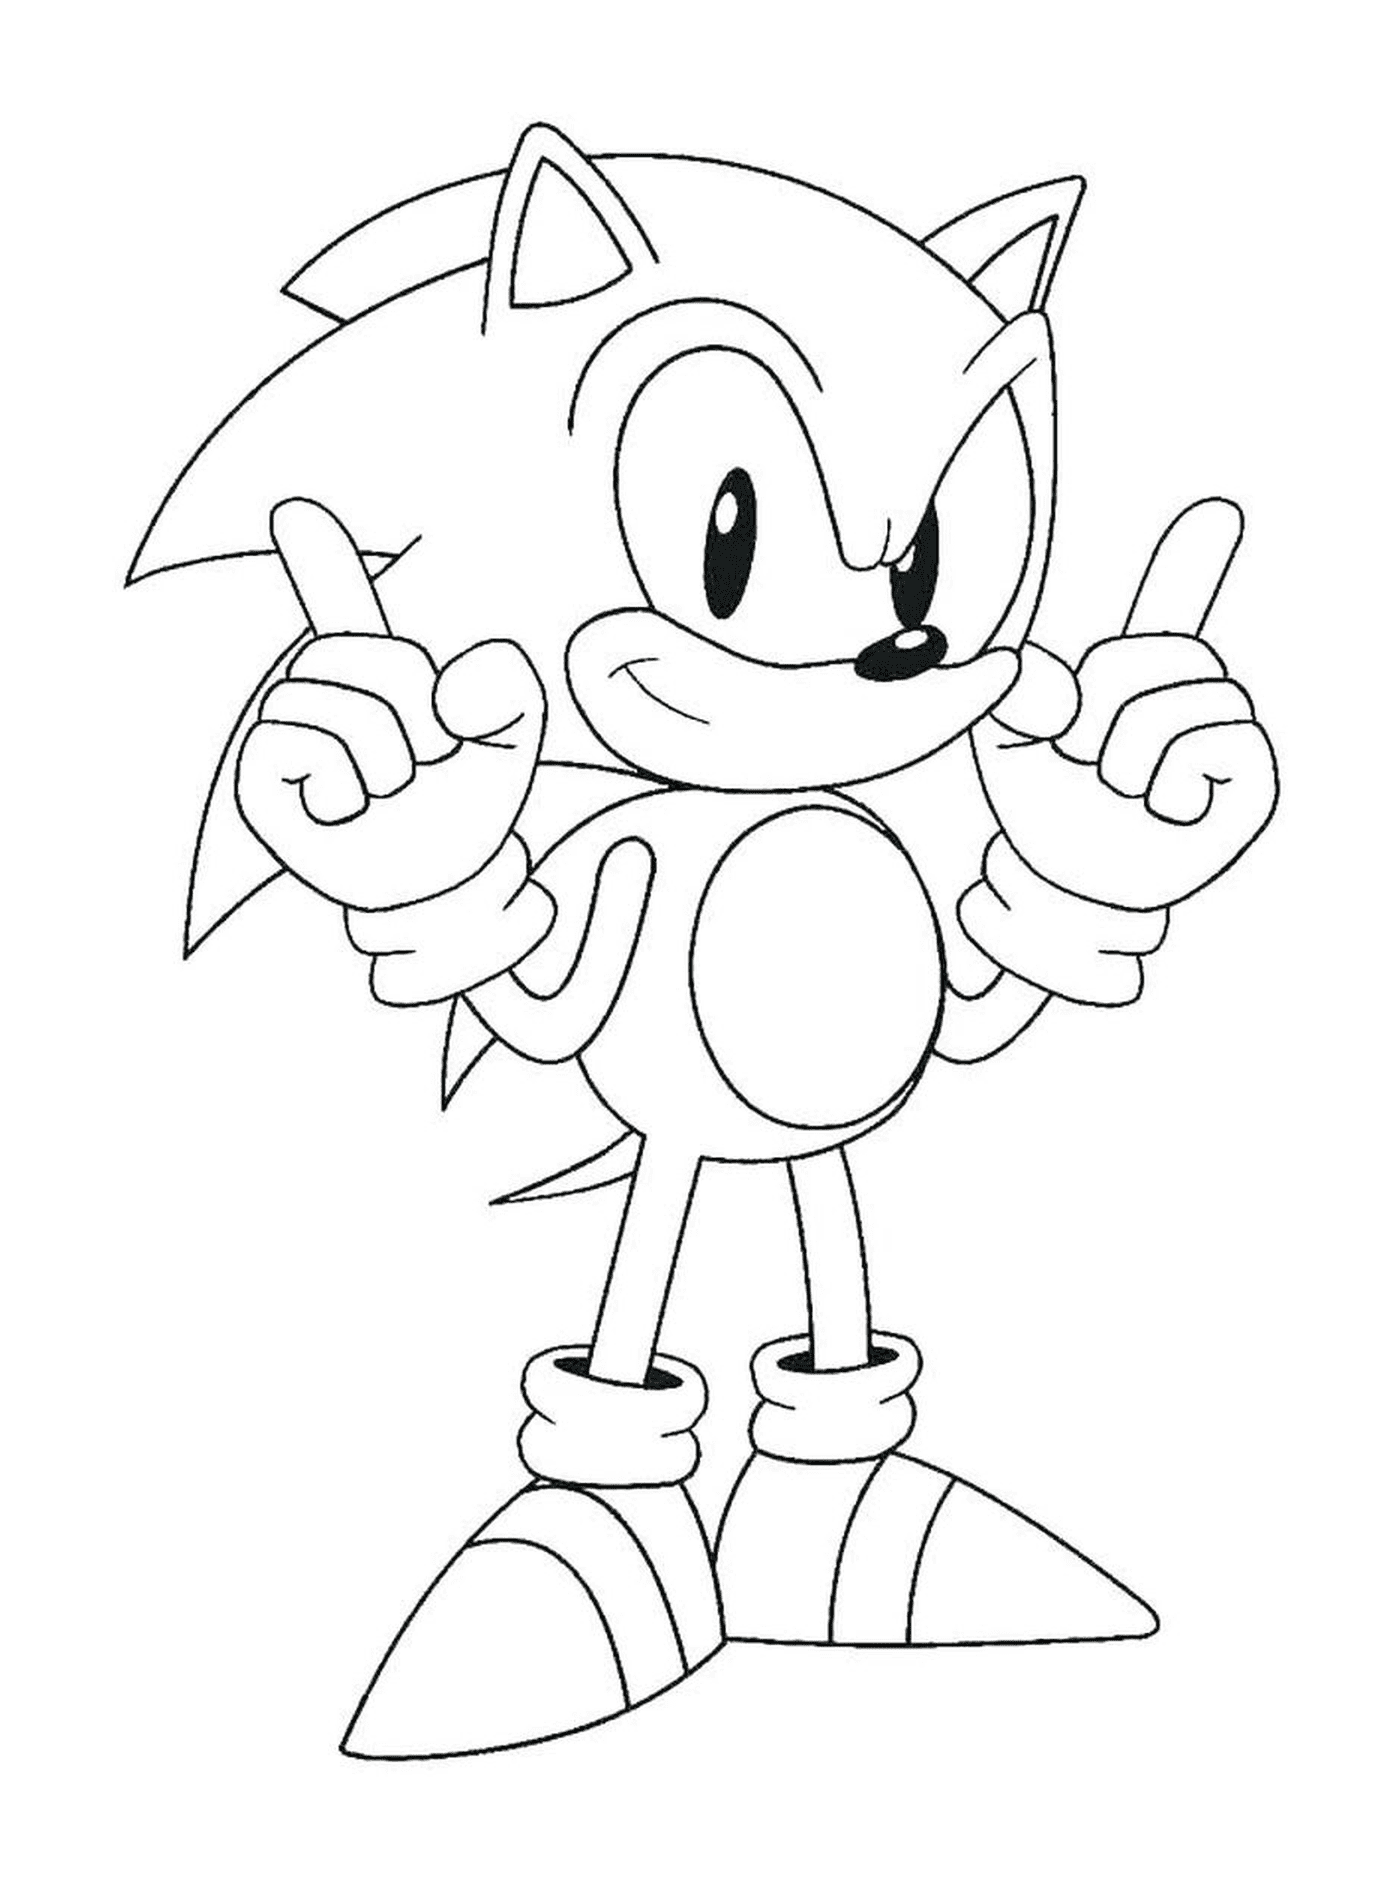  Sonic, the blue hedgehog 